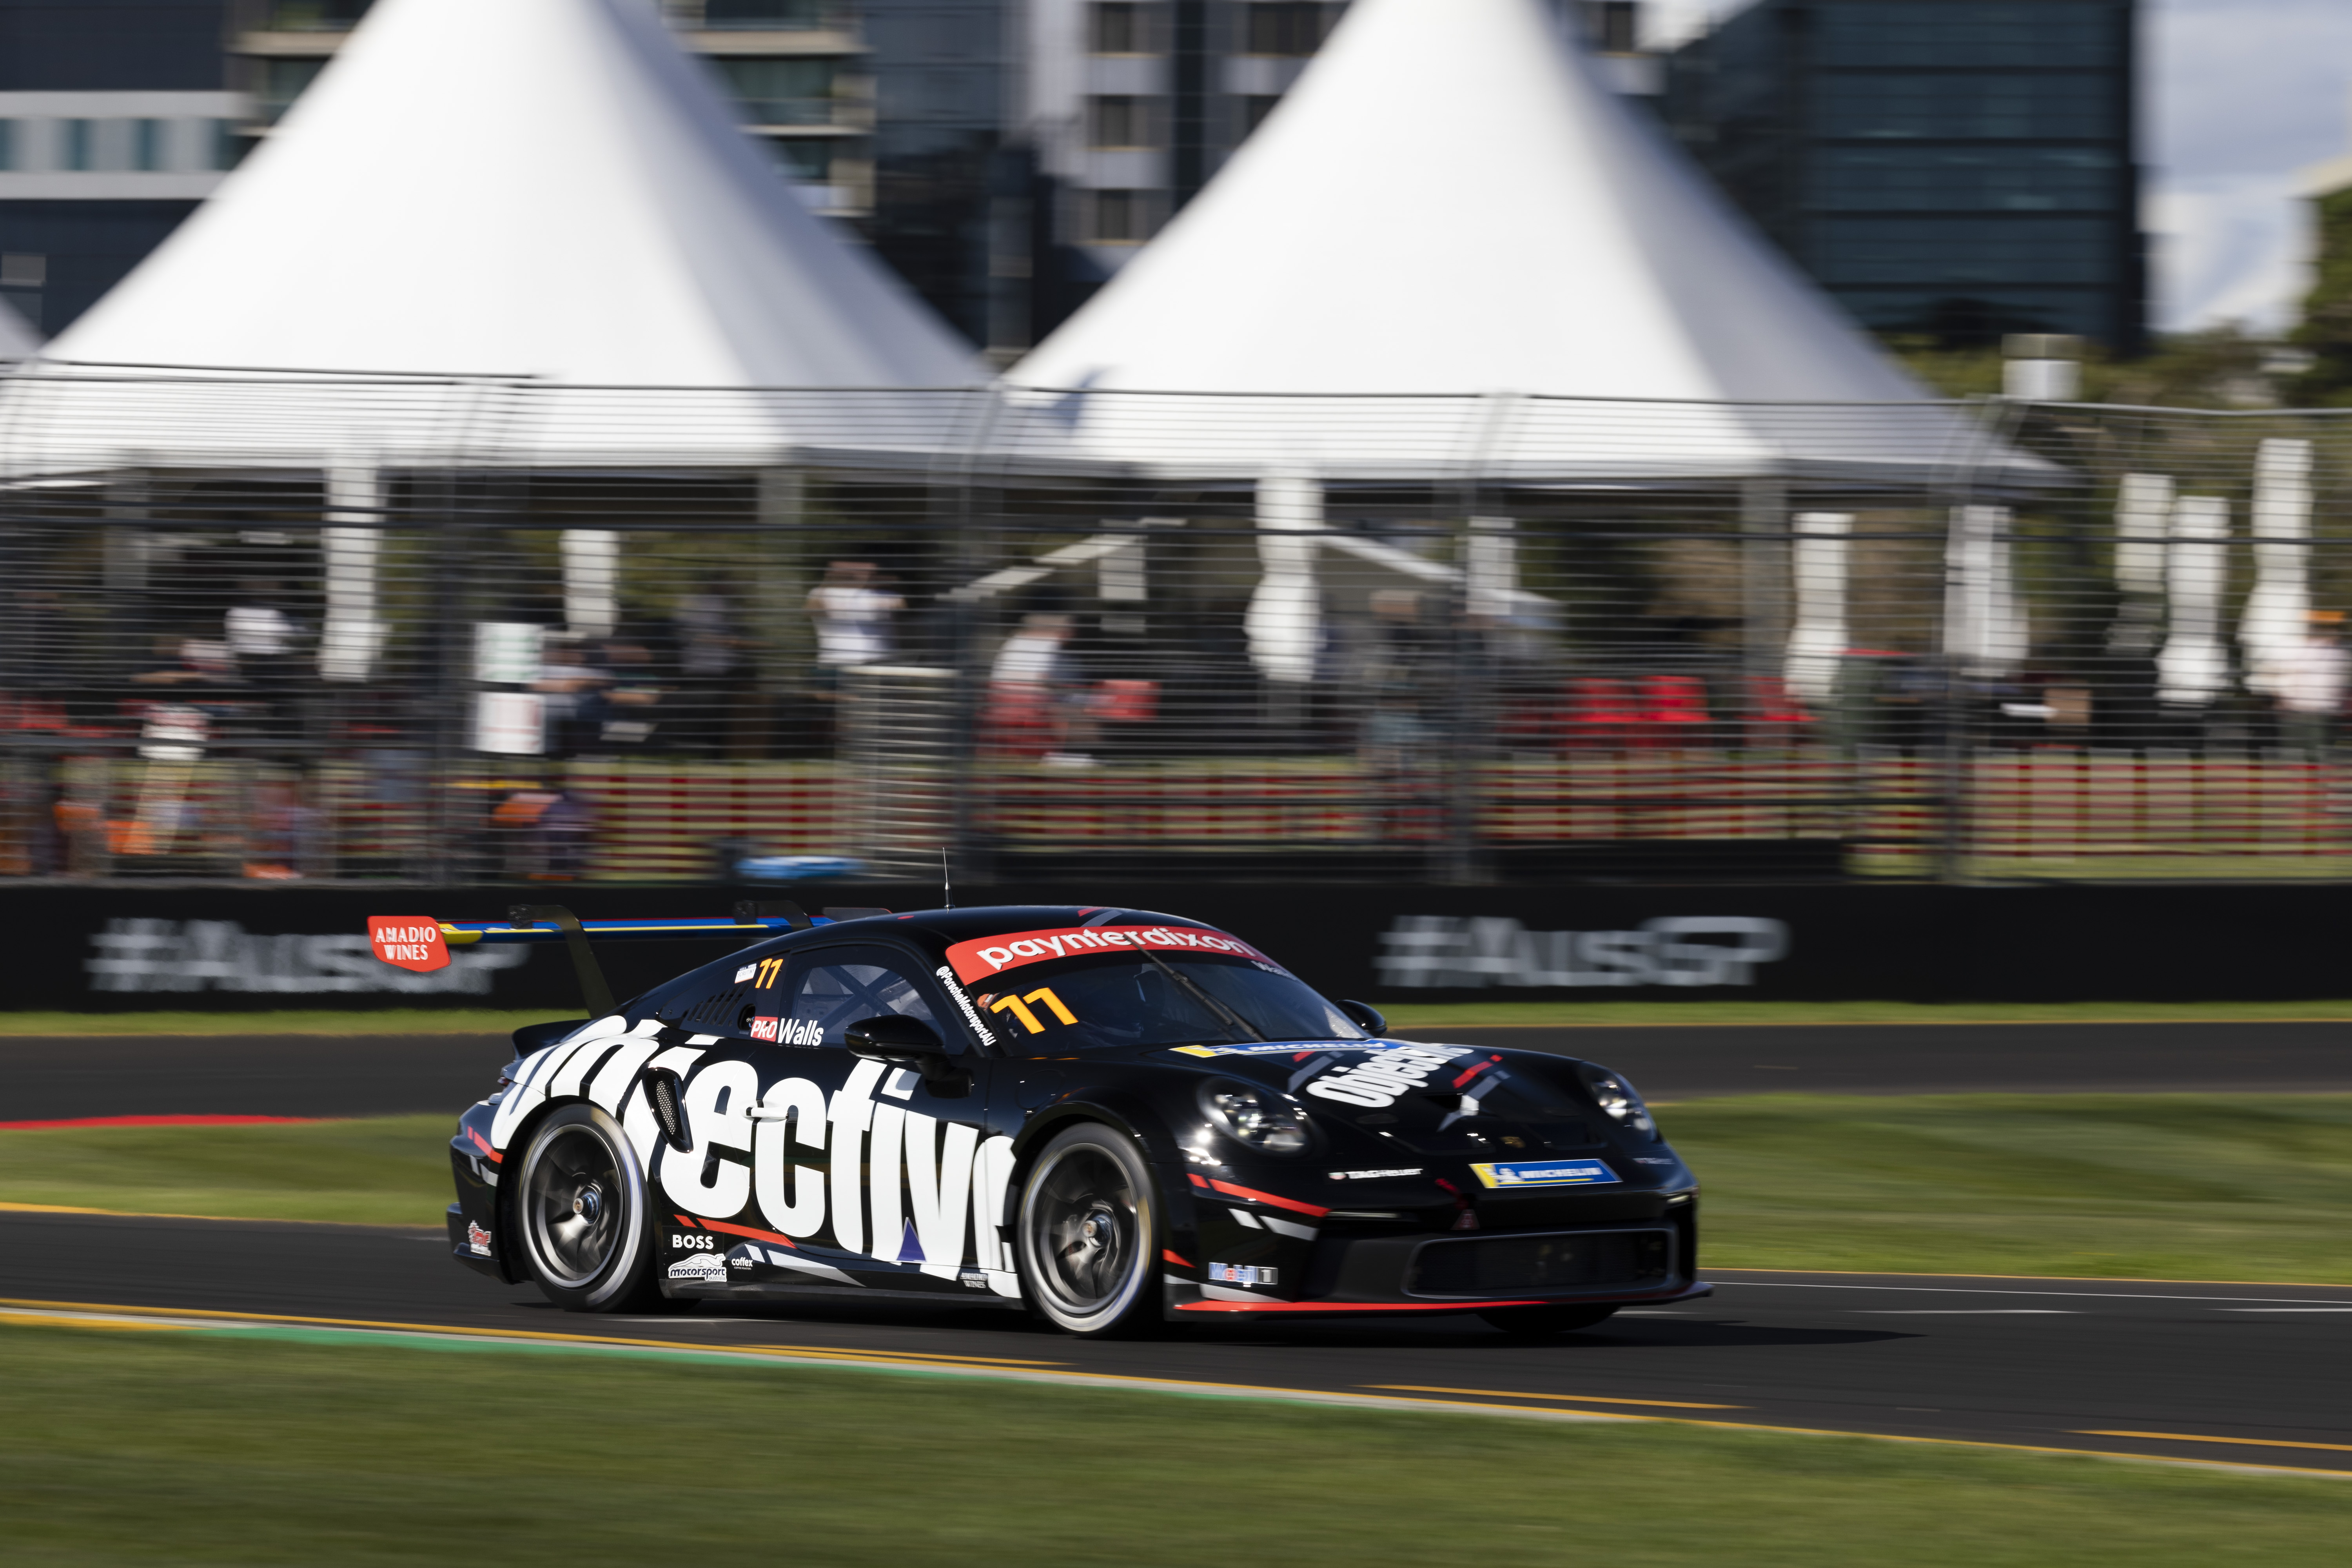 Jackson Walls with McElrea Racing in the Porsche Carrera Cup Australian Grand Prix 2022